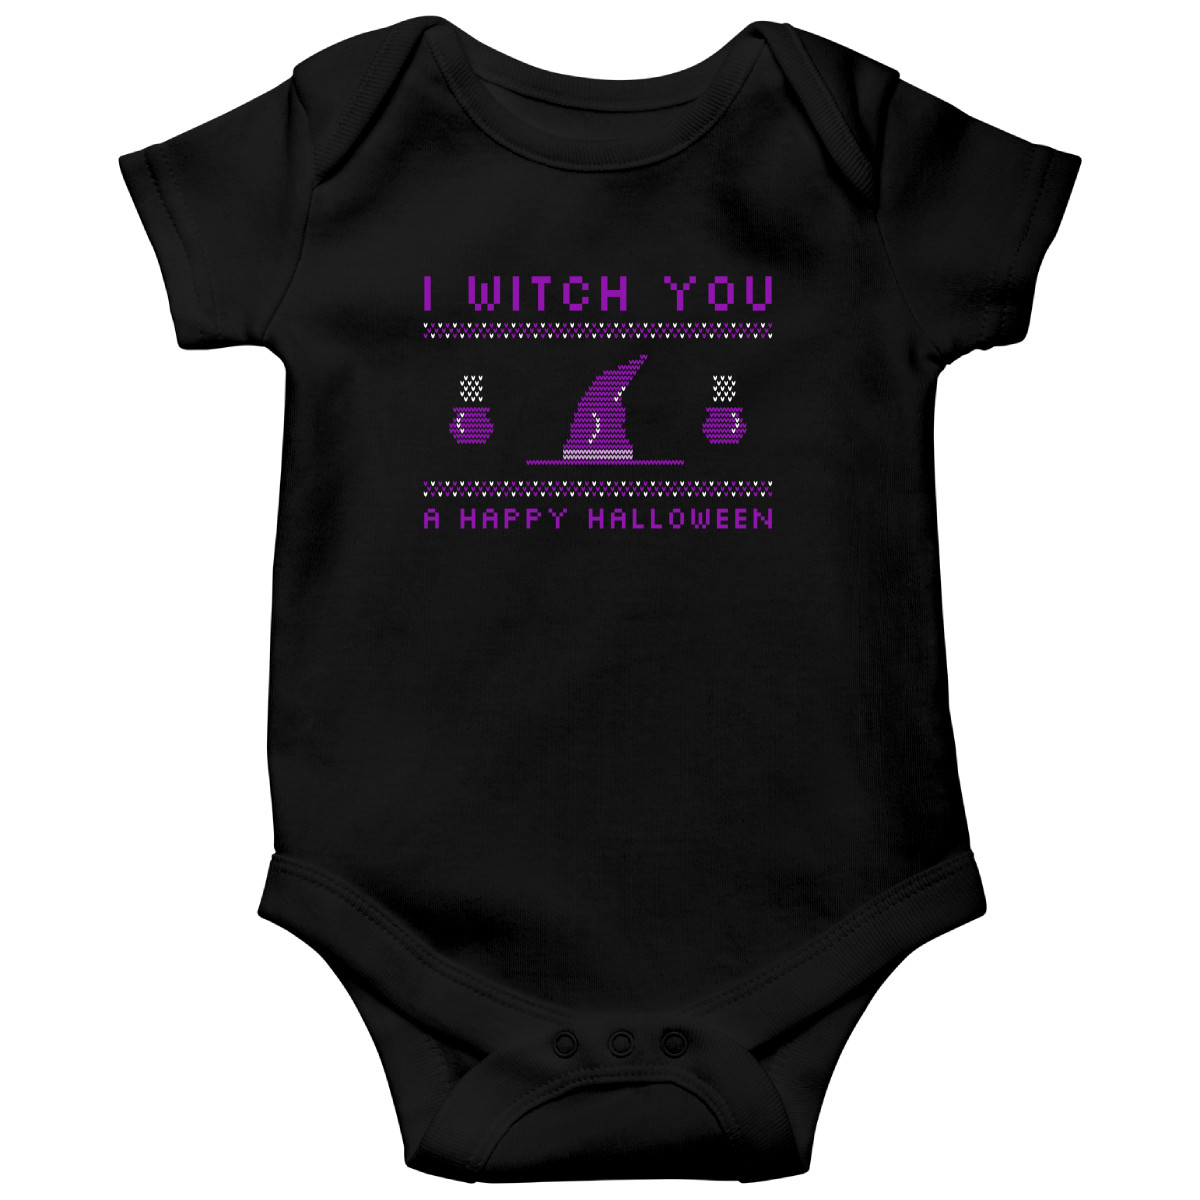 I Witch You a Happy Halloween Baby Bodysuits | Black